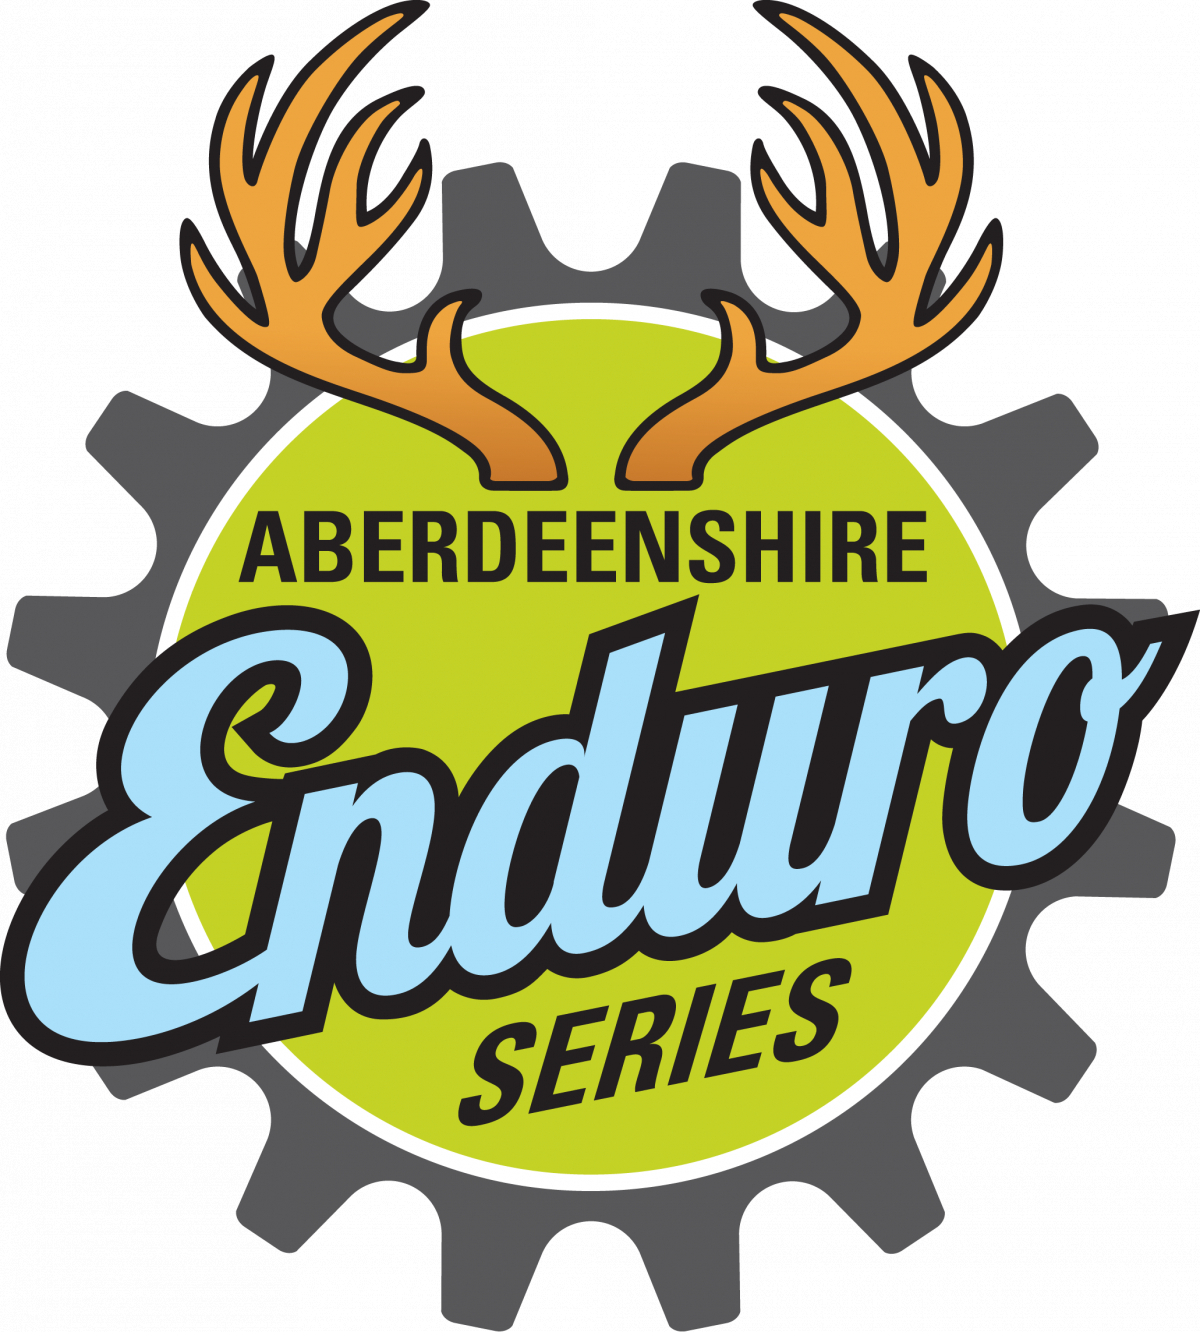 Scolty Enduro - Aberdeenshire Enduro Series 2021